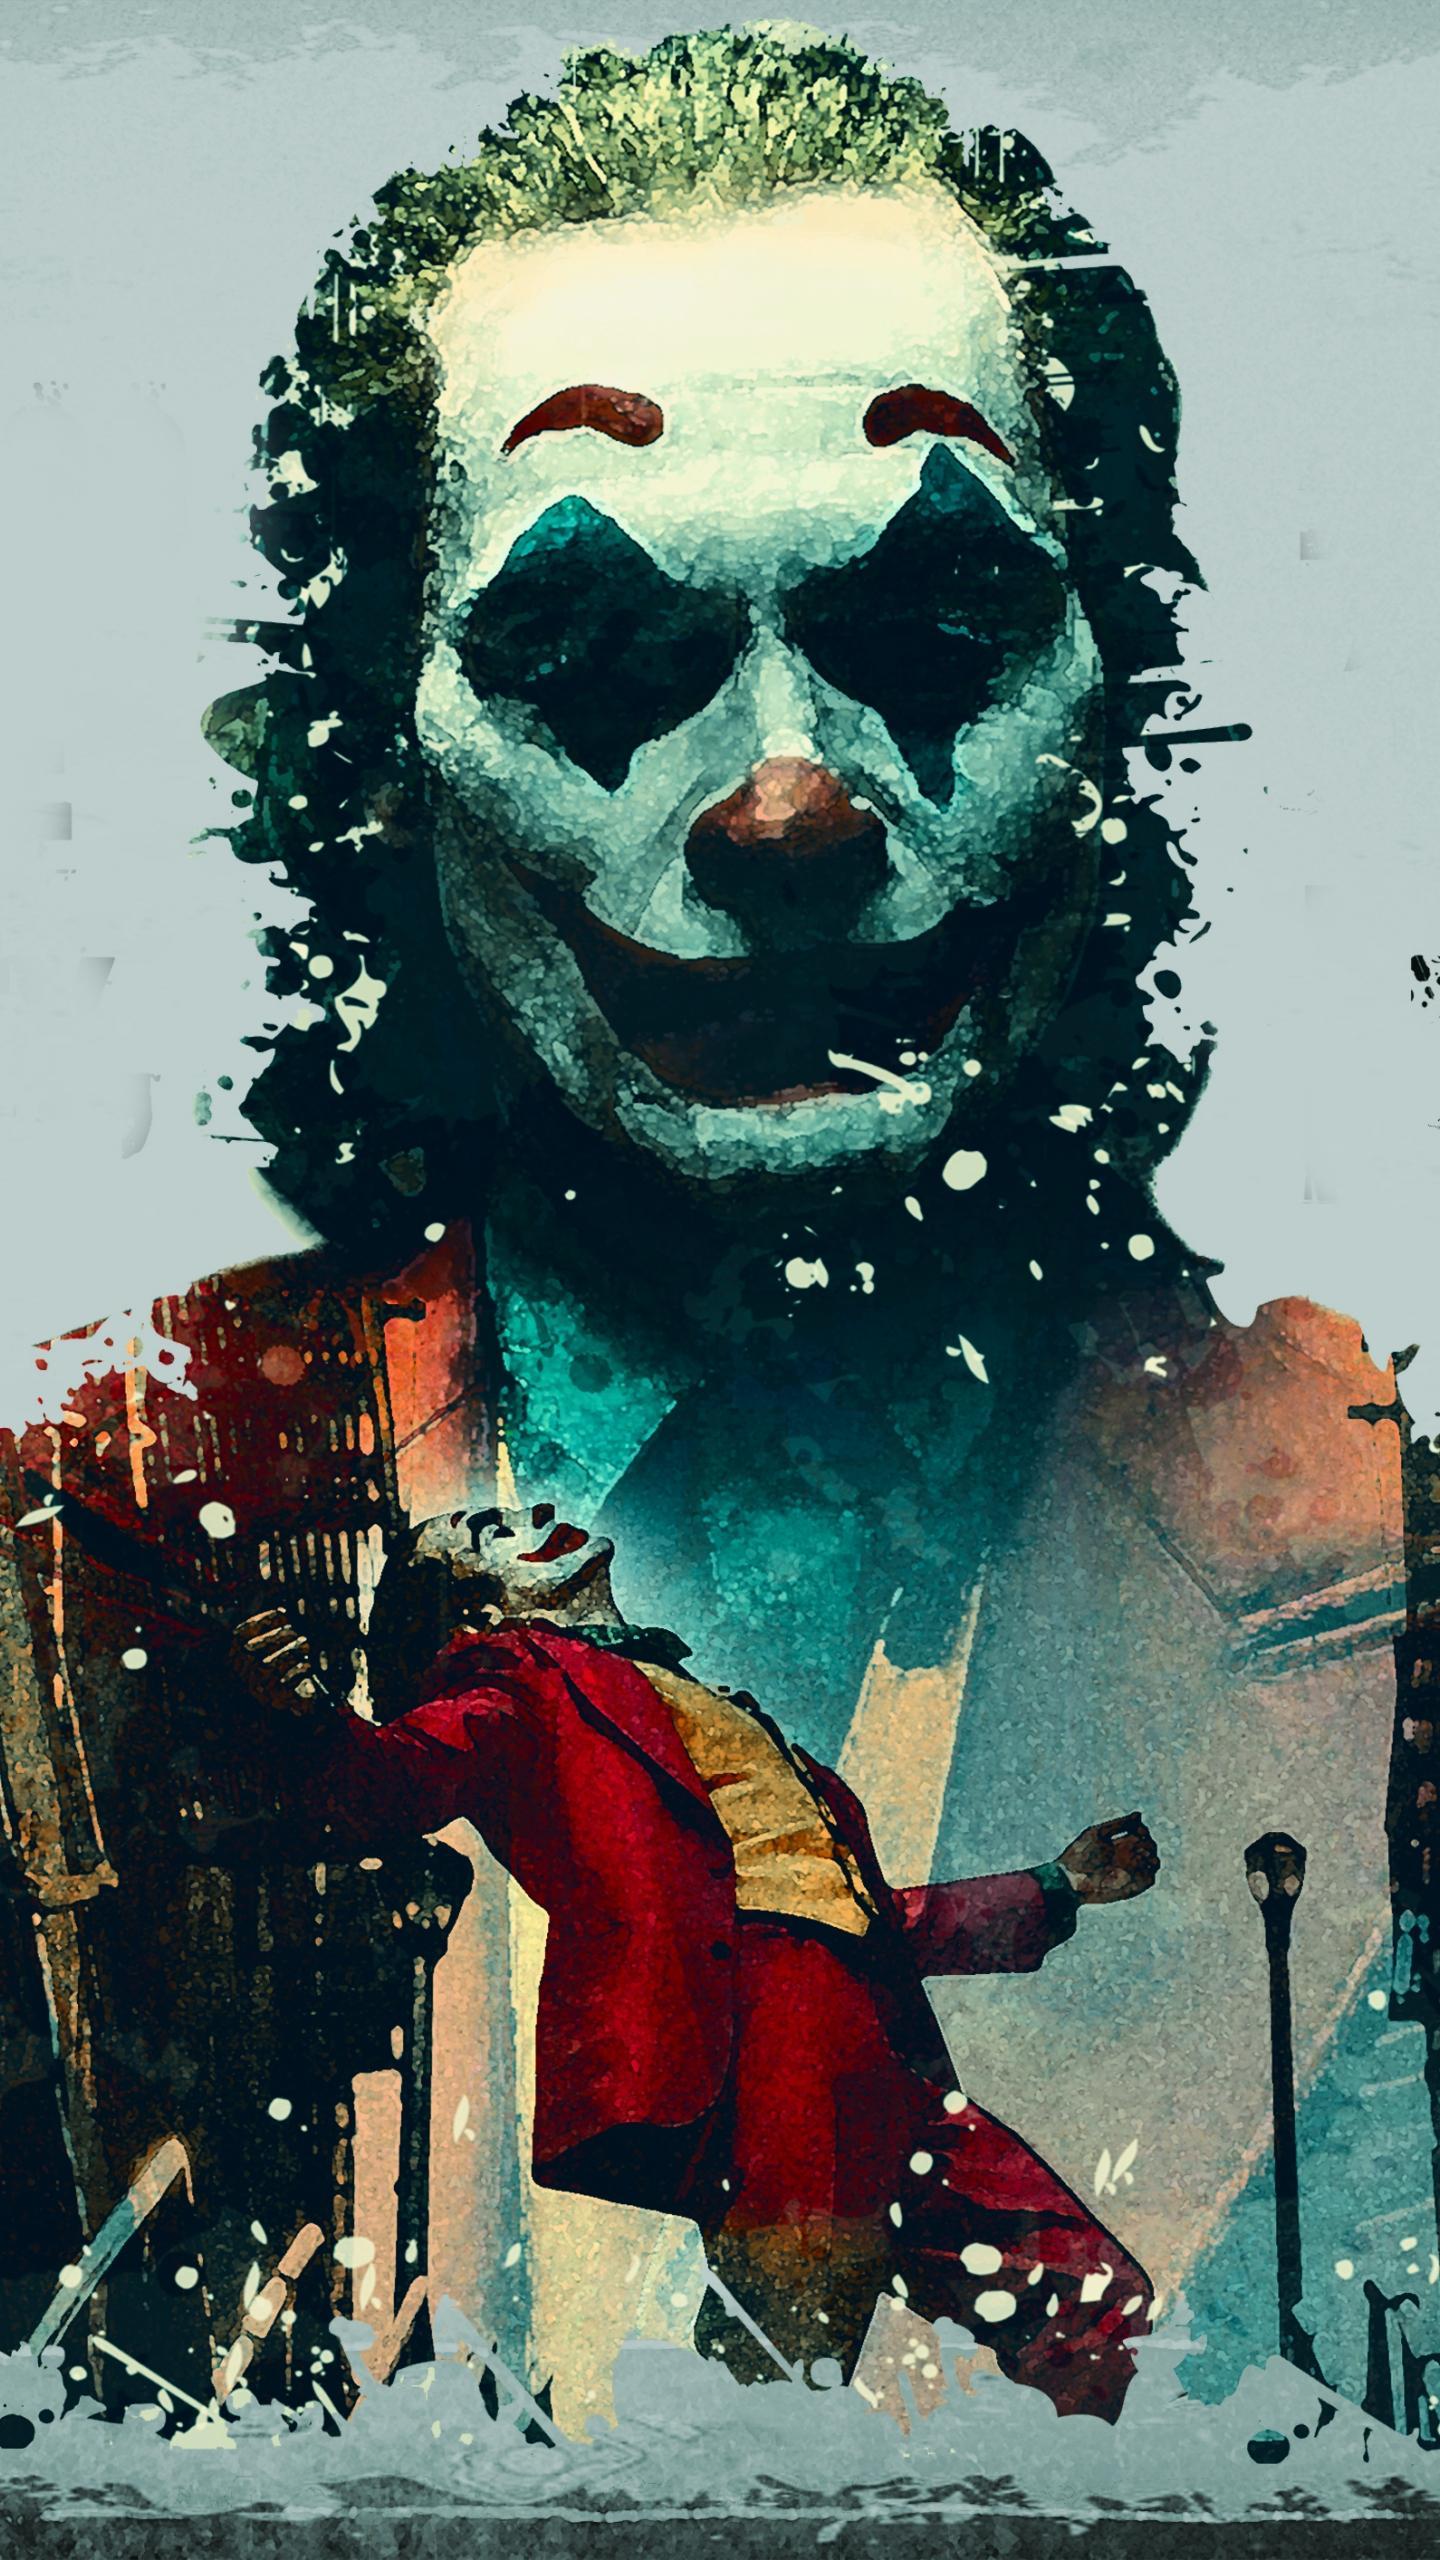 Joker 2019 Art Wallpapers